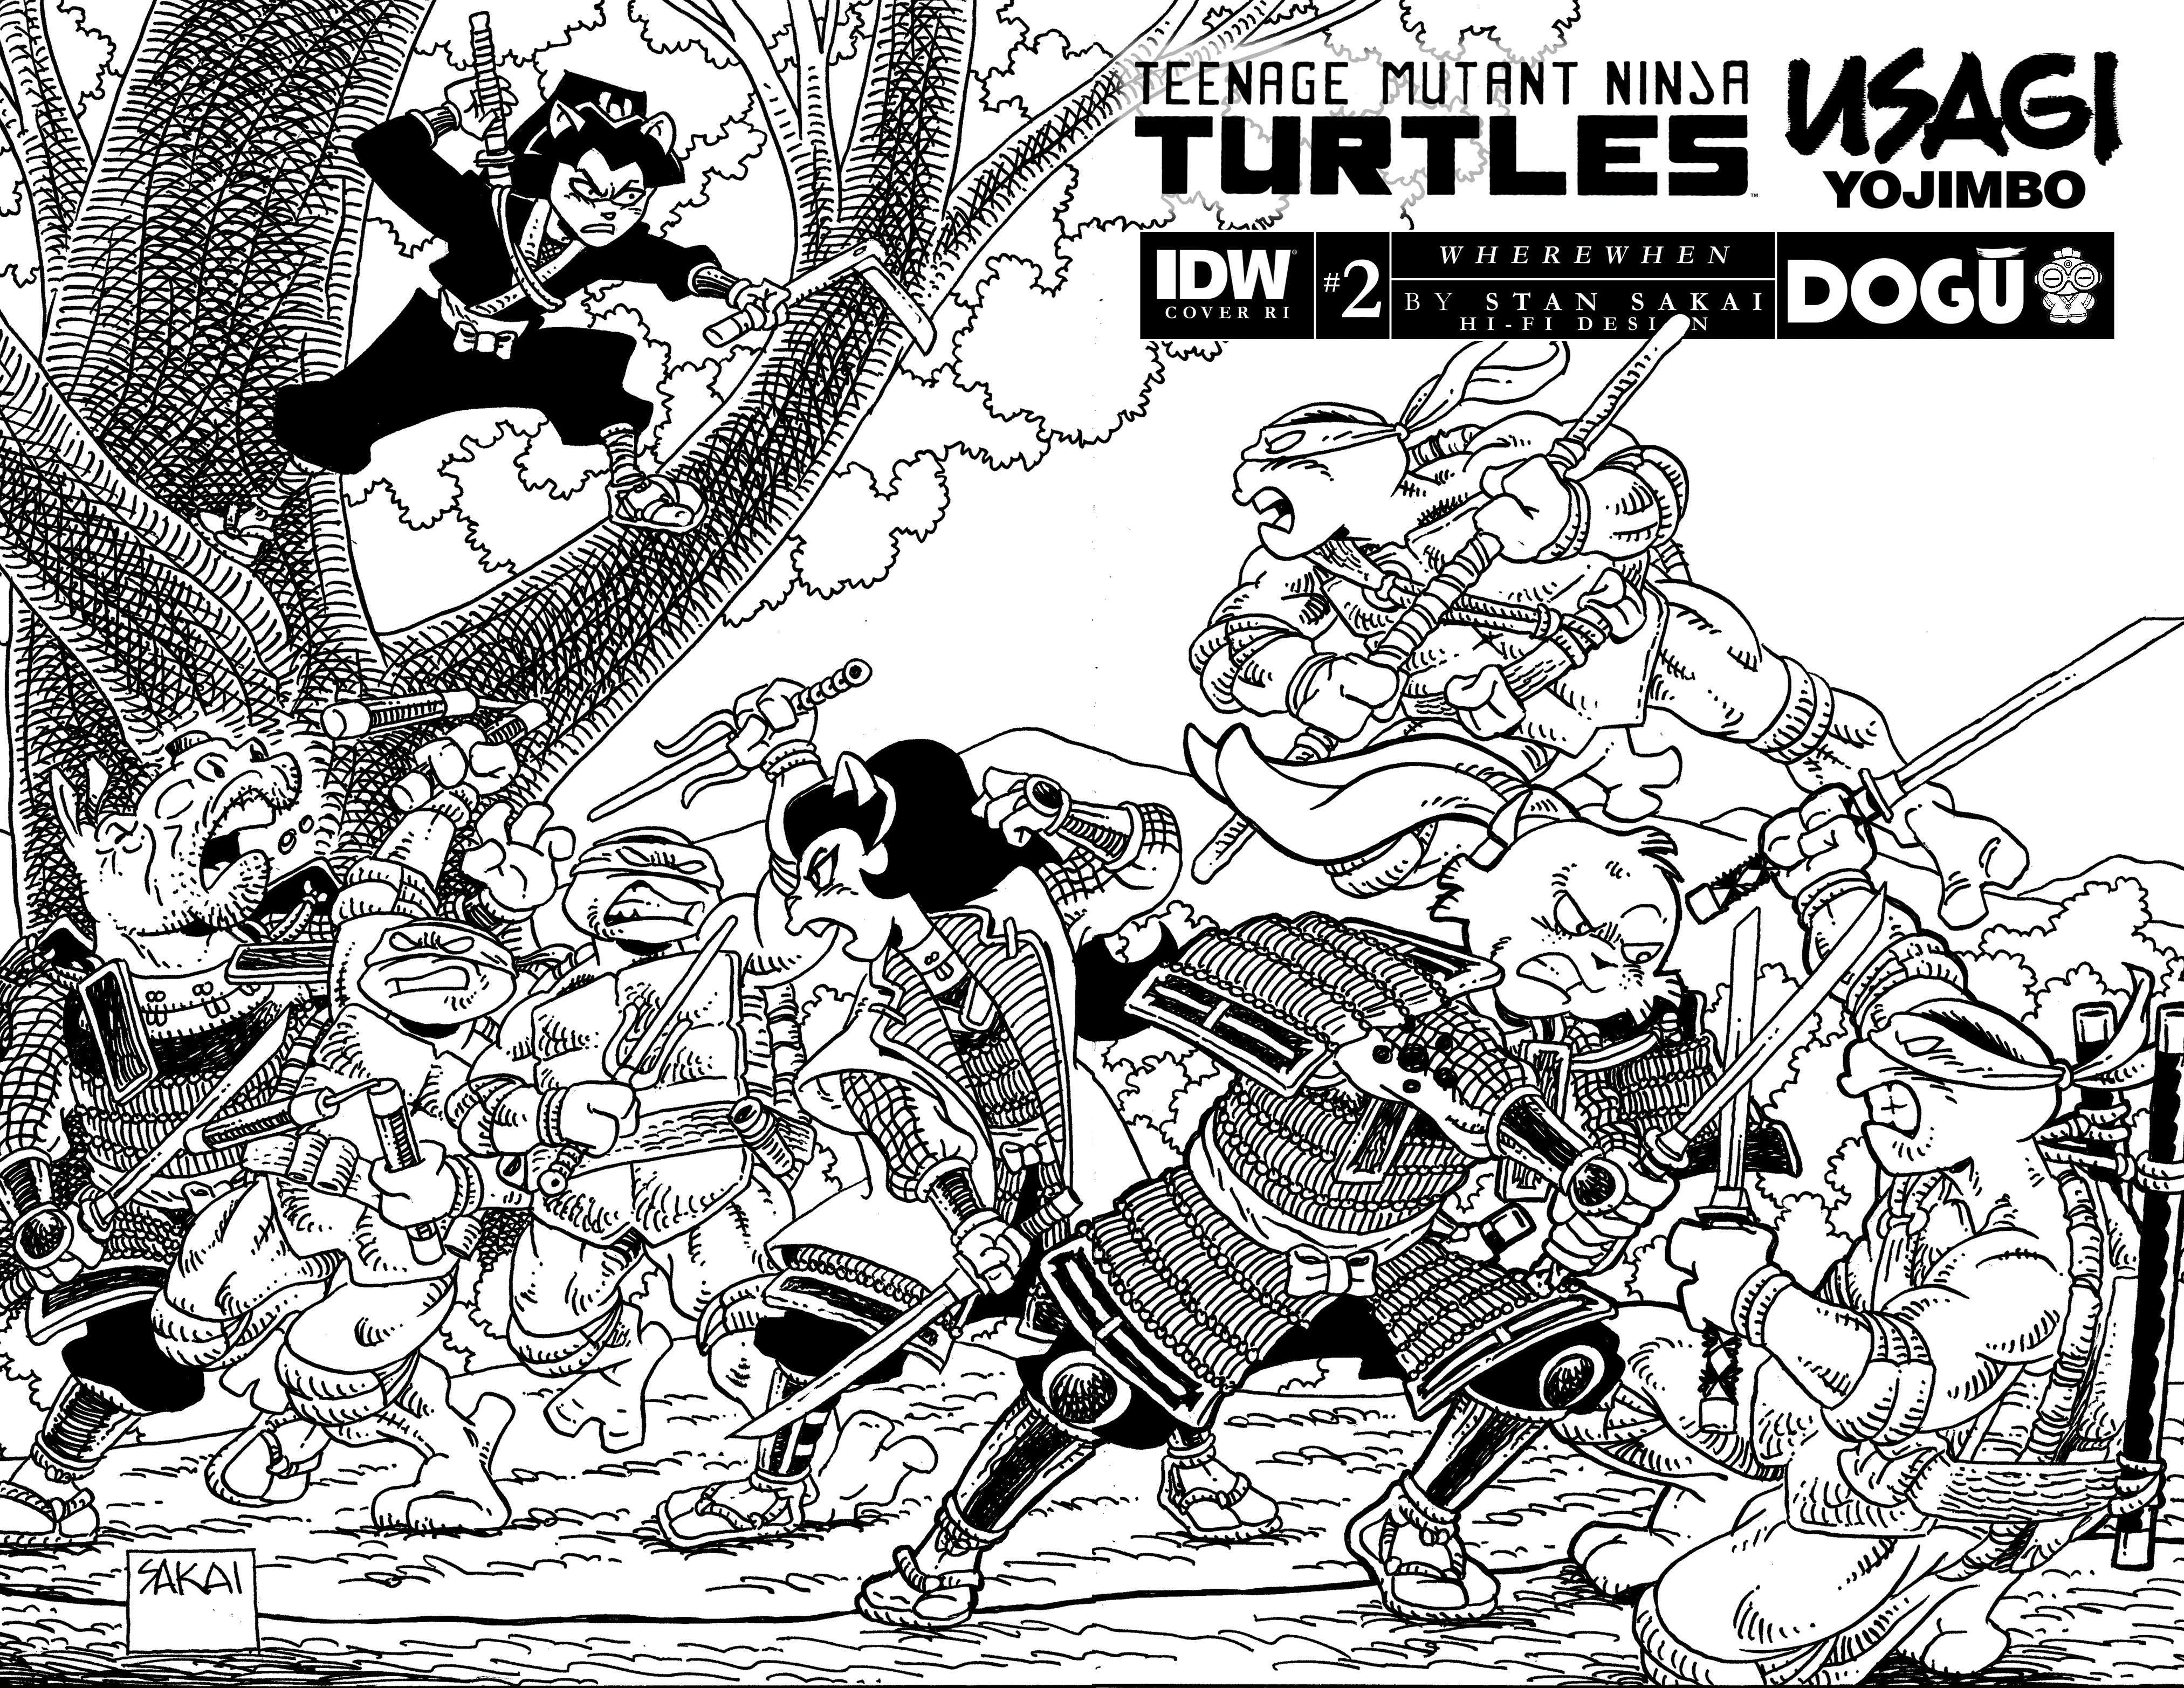 Teenage Mutant Ninja Turtles/Usagi Yojimbo WhereWhen #2 Cover D 1 for 25 Incentive Sakai